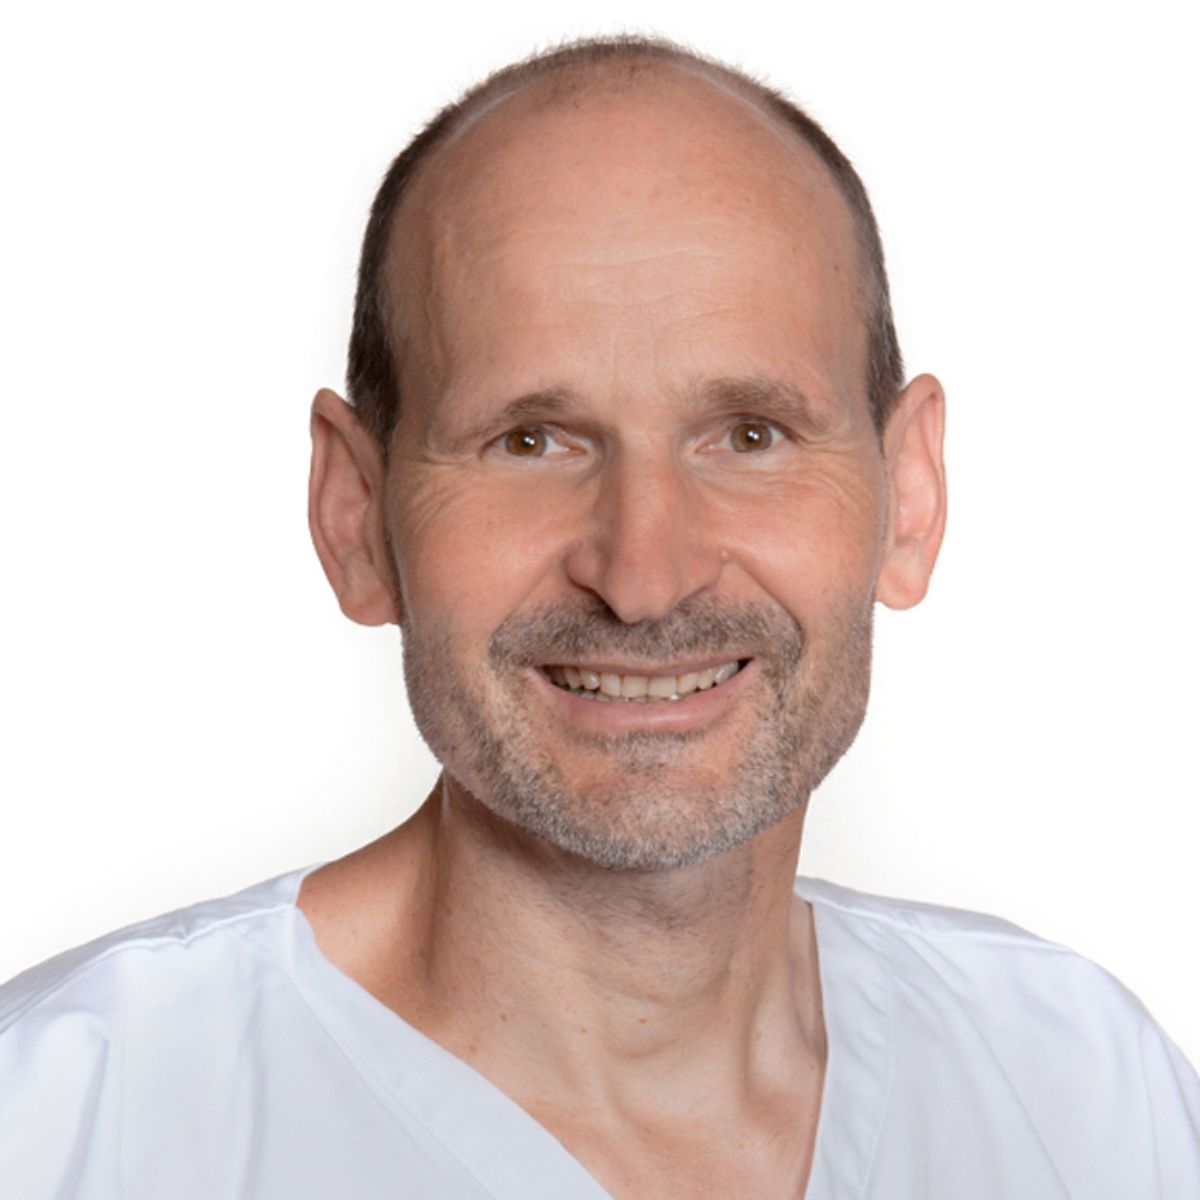 PD Dr.  Michael Mayr ist Co-Chefarzt der Medizinischen Poliklinik am Universitätsspital Basel